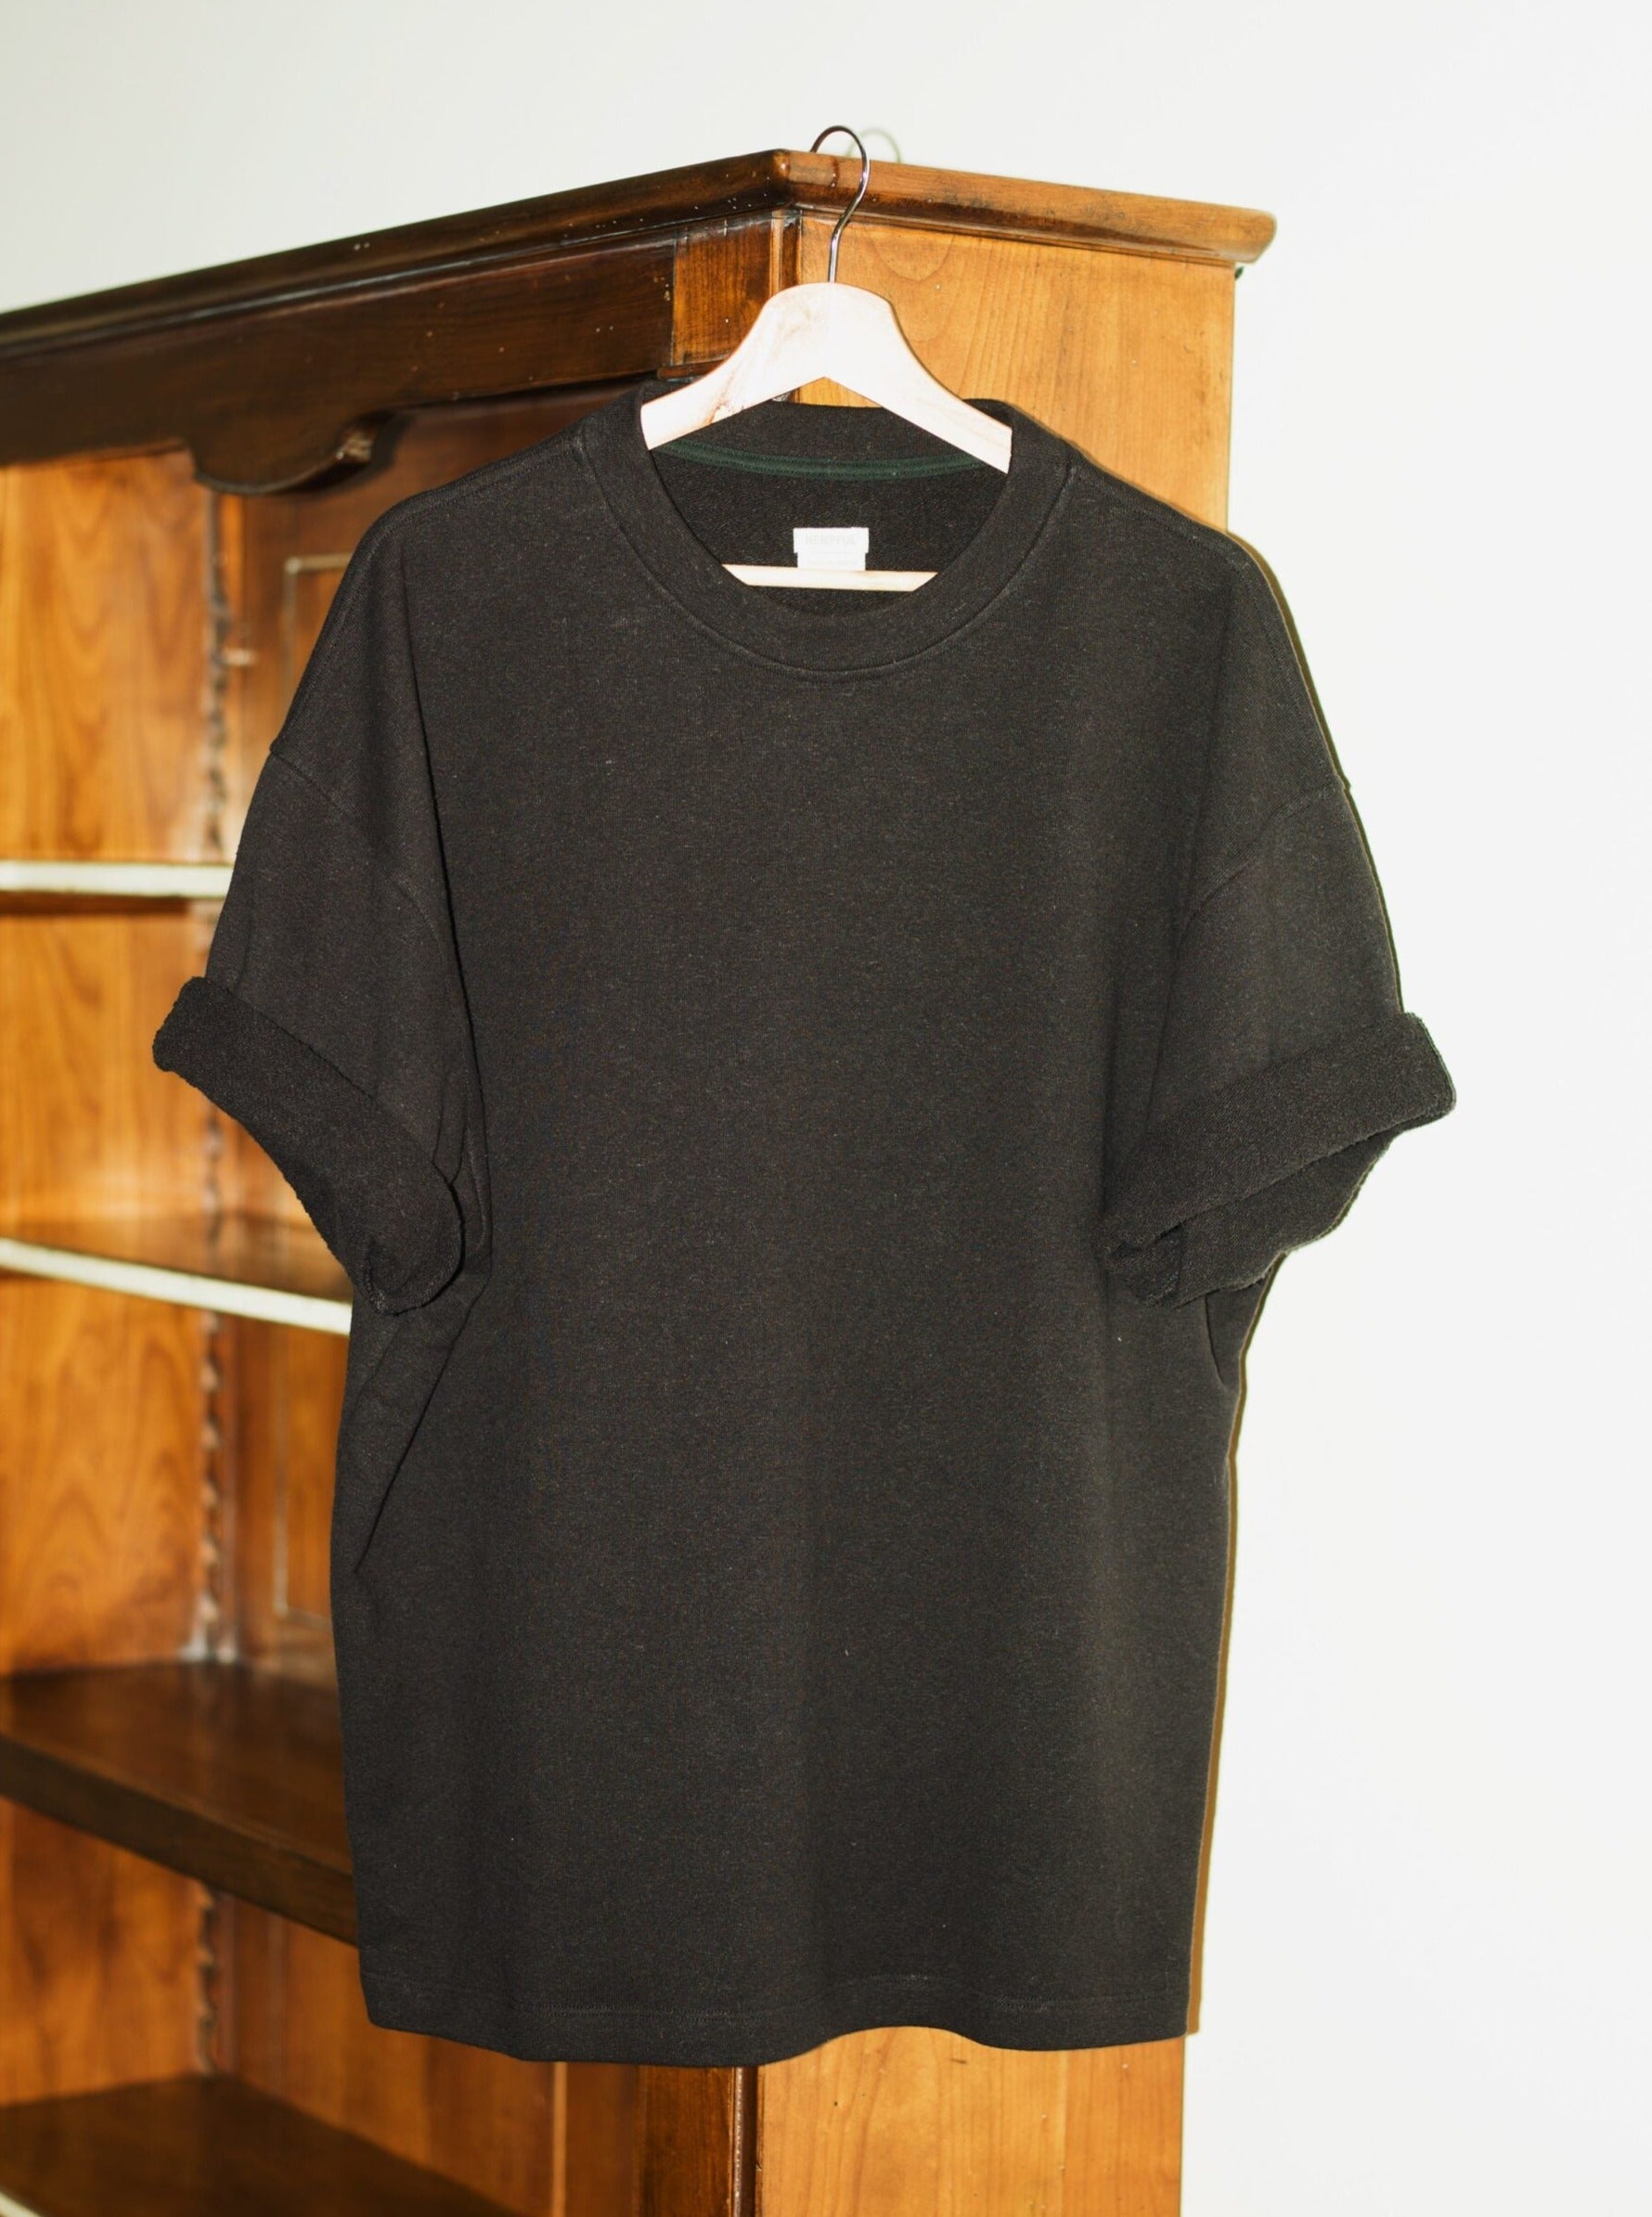 Hempful Cindy T-shirt in Black